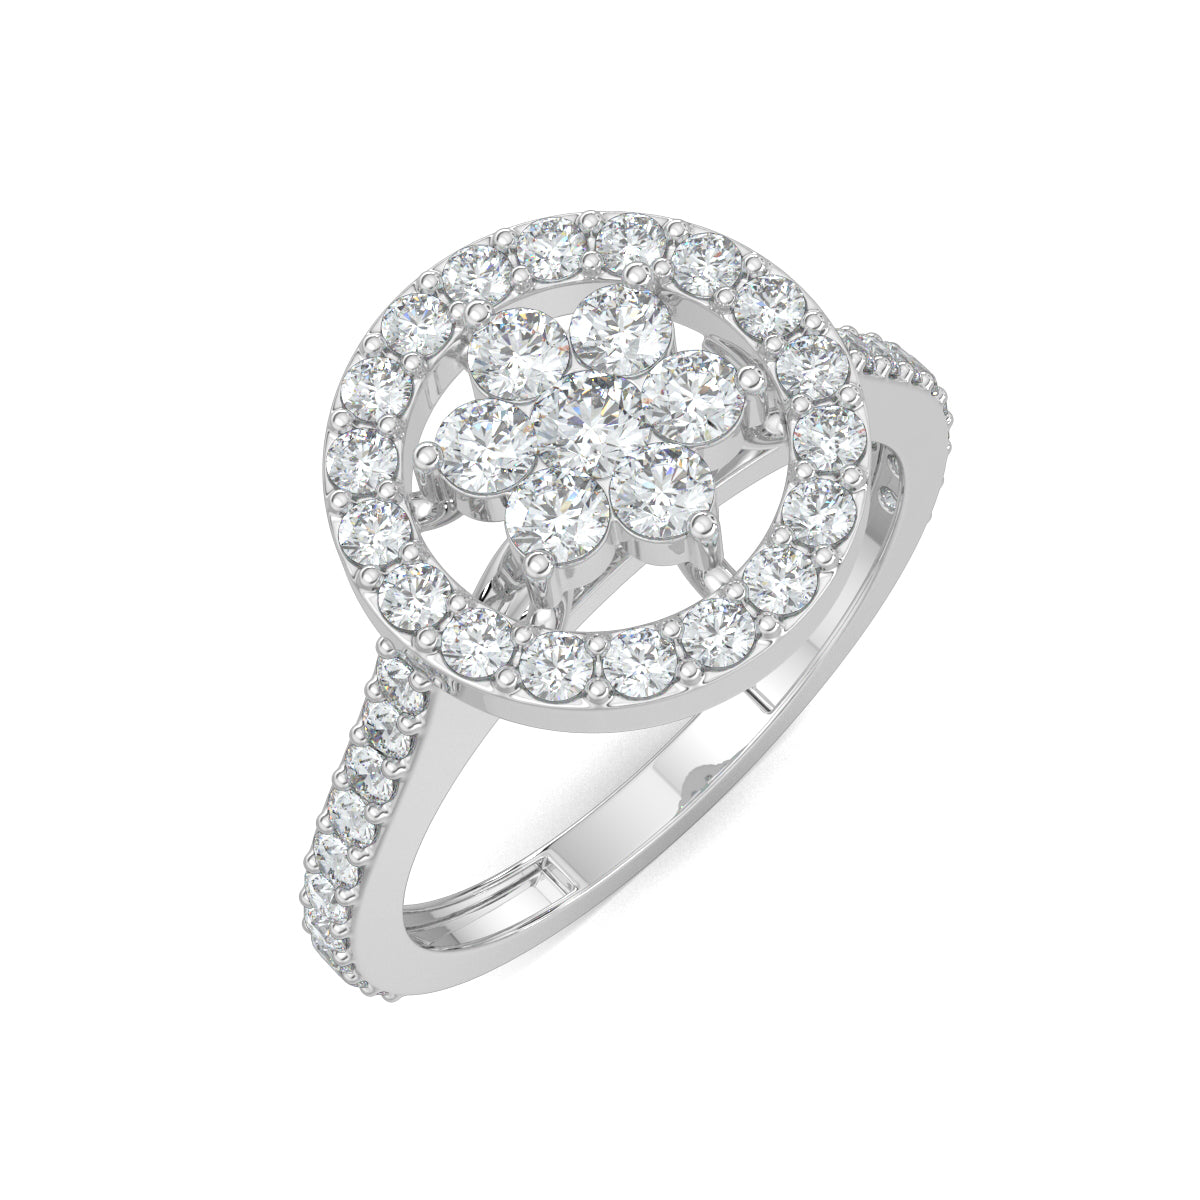 White Gold, Diamond Ring, natural diamond ring, lab-grown diamond ring, sleek halo ring, round diamond band, pave setting, halo setting, elegant jewelry